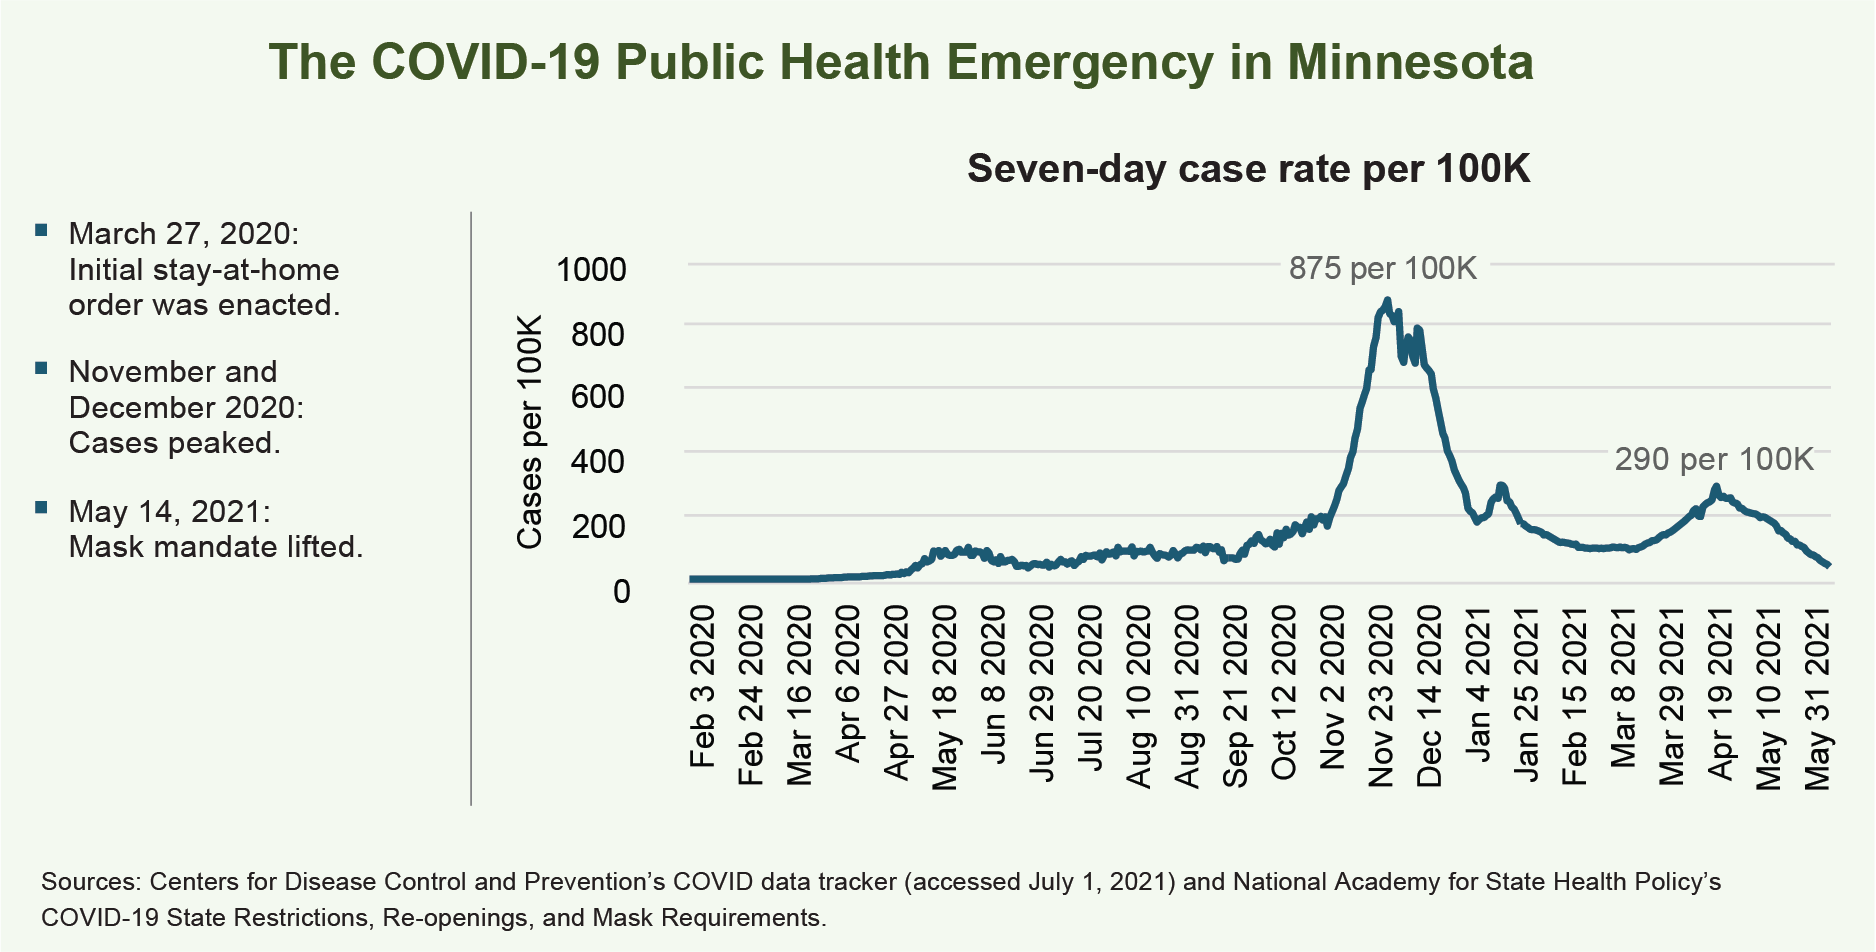 The COVID-19 public health emergency in Minnesota